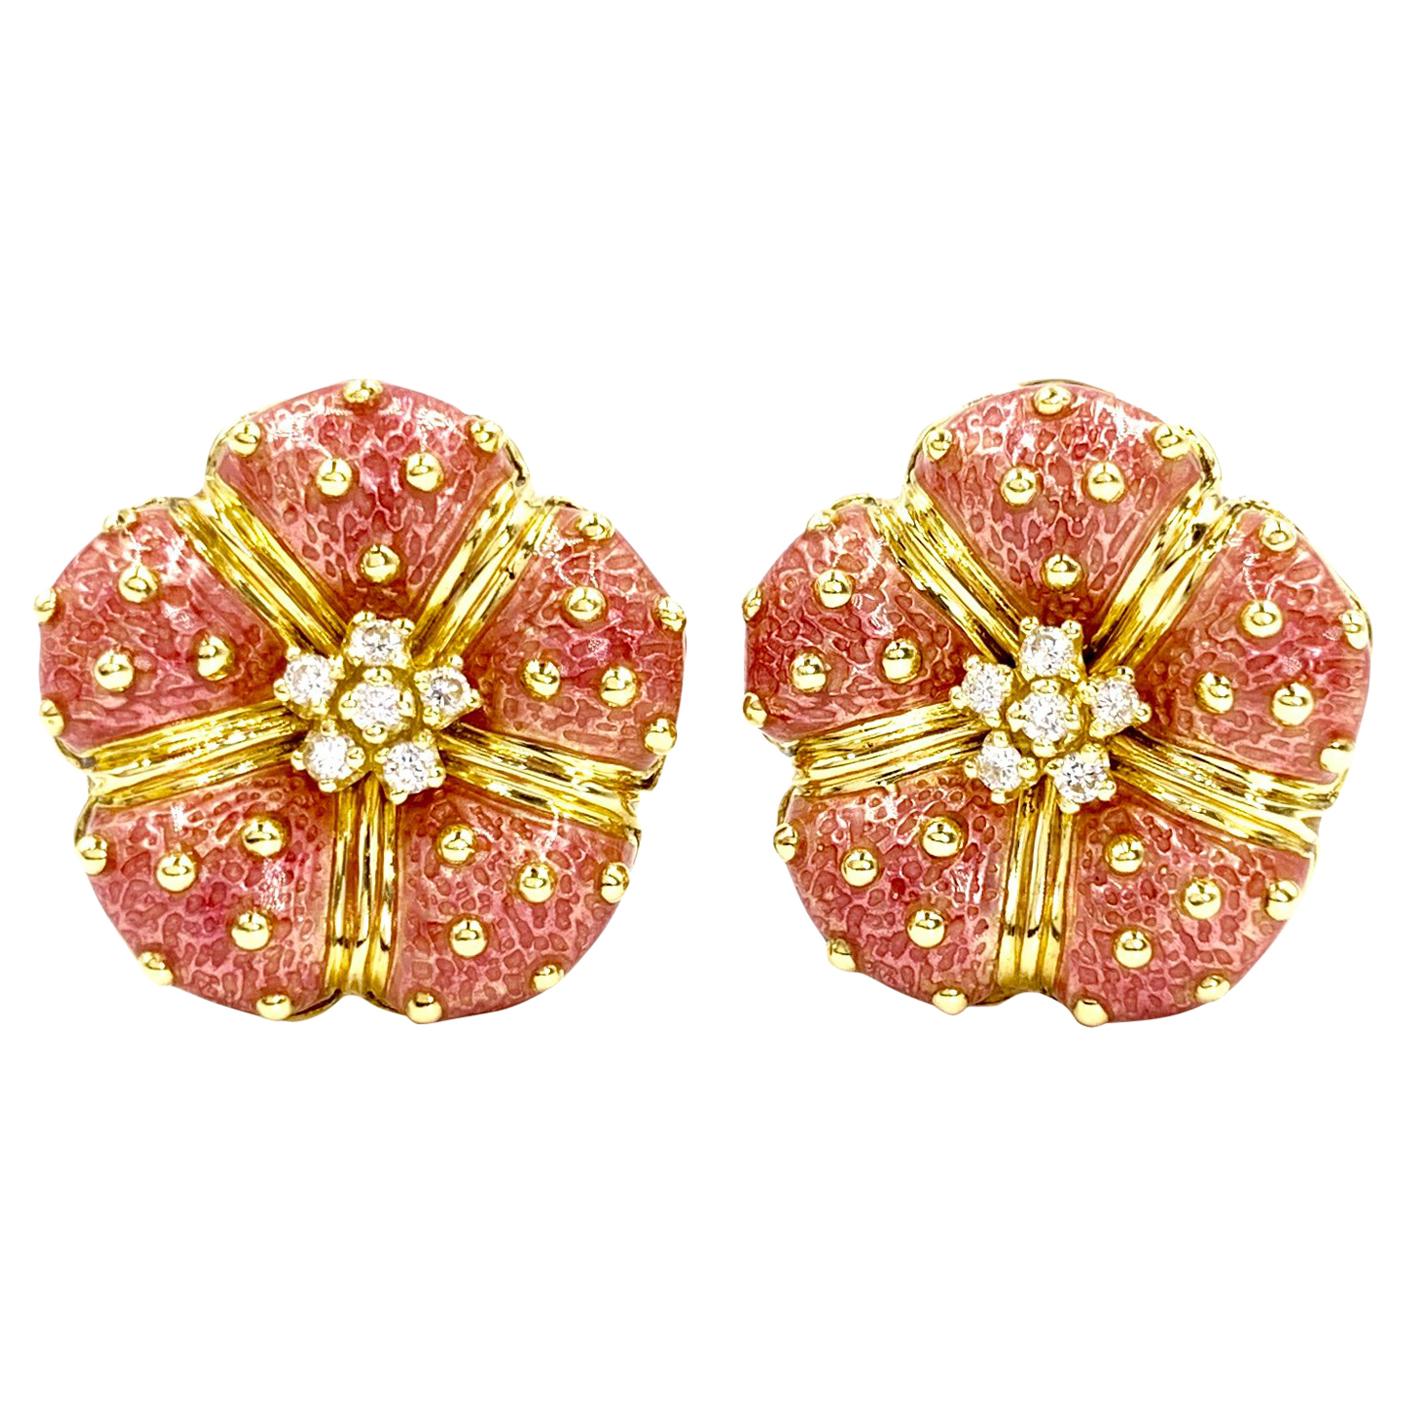 Hidalgo 18 Karat Diamond and Enamel Flower Earrings